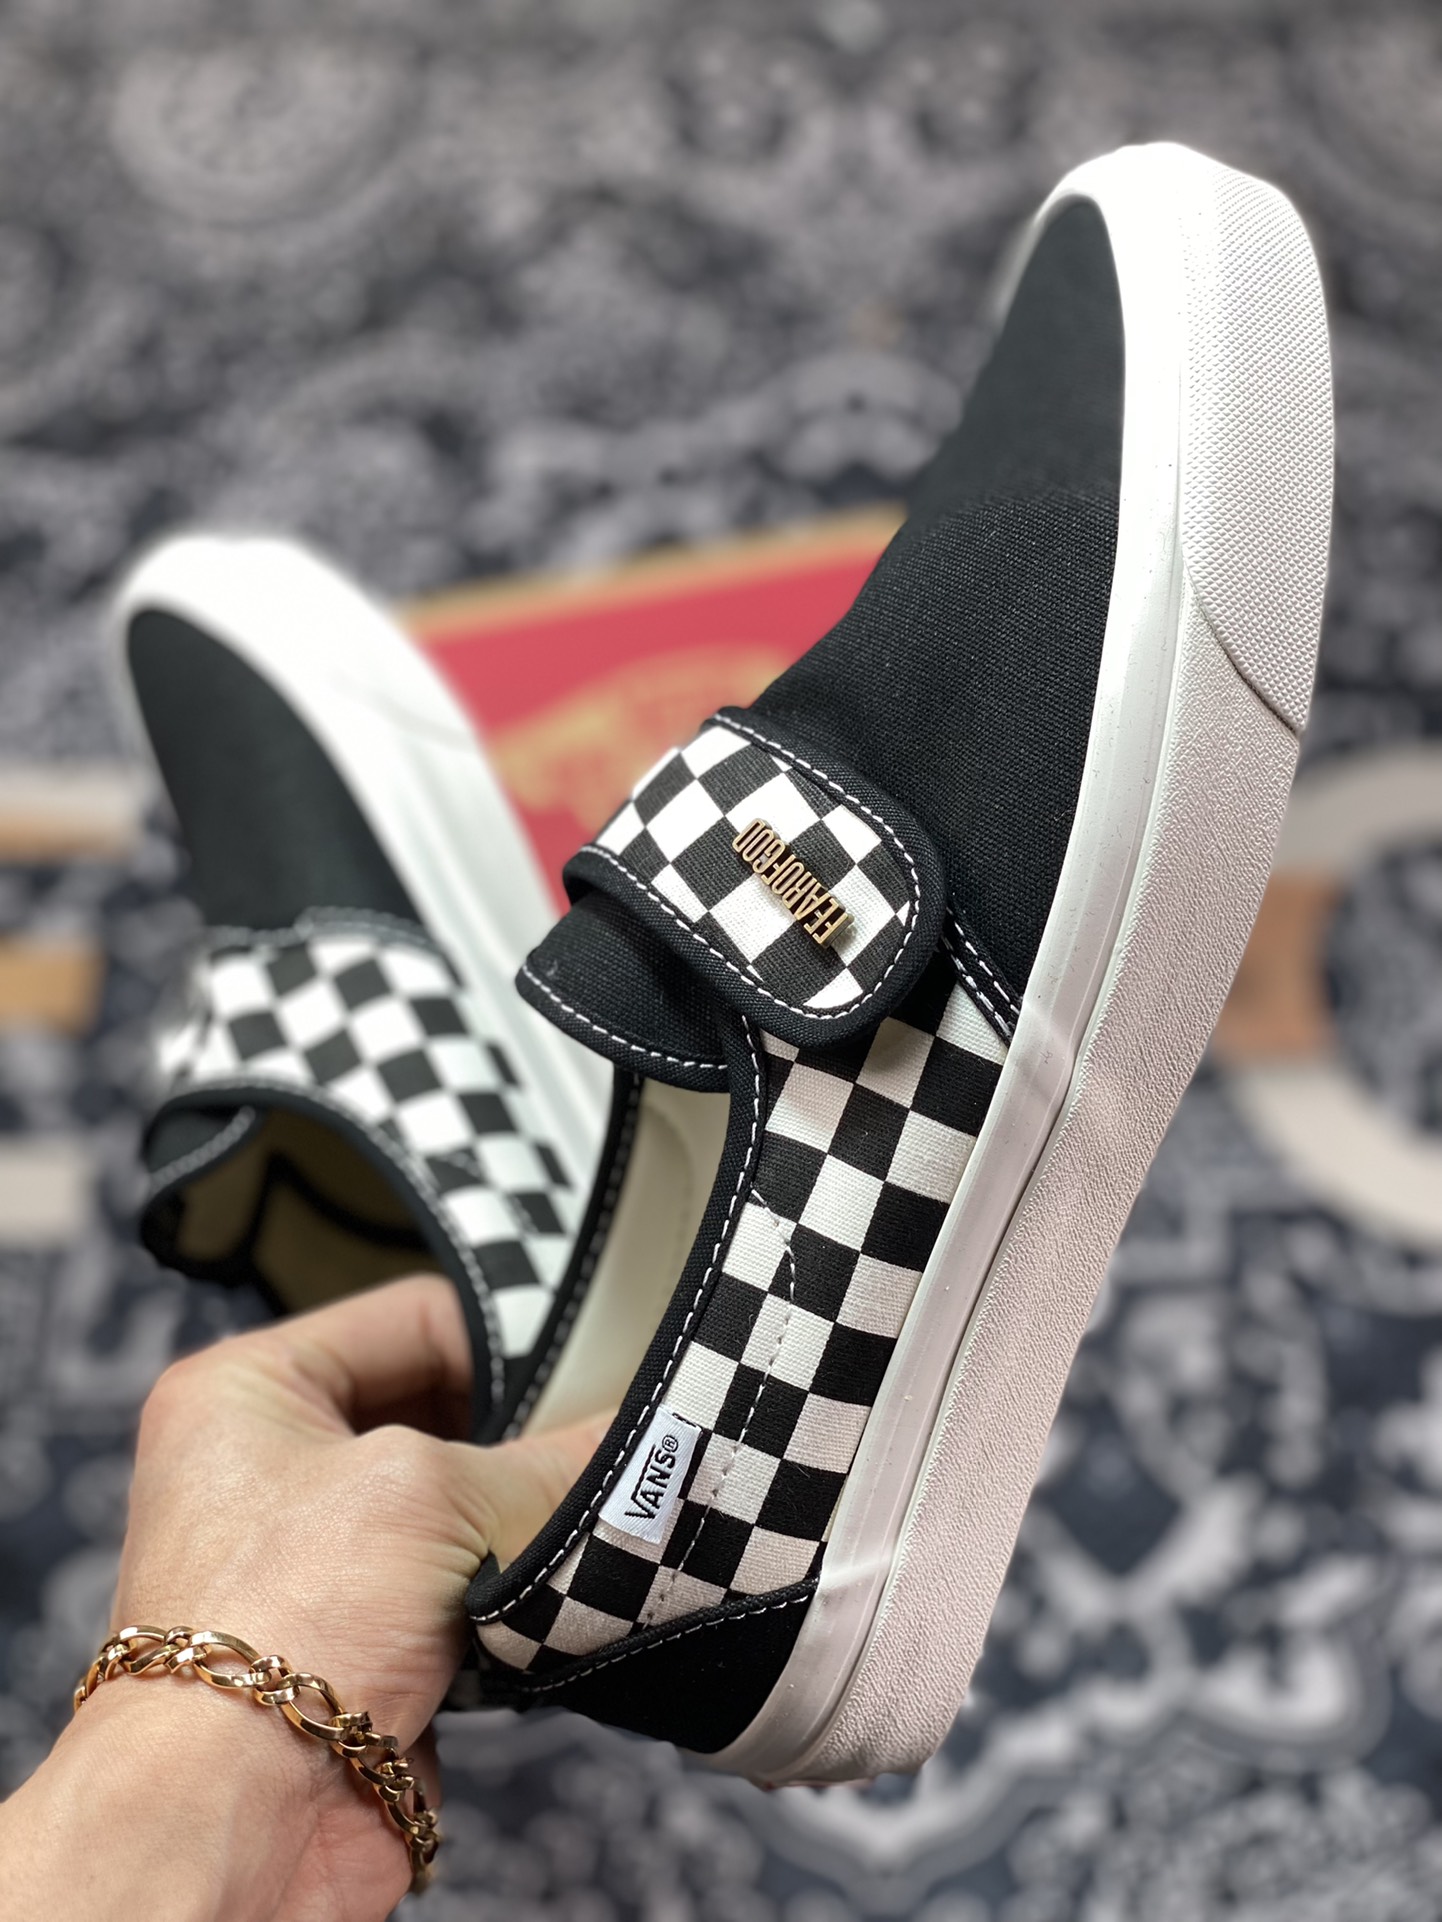 Vans Slip-On 47V DX Slip-on Velcro Black and White Checkerboard Canvas Shoes